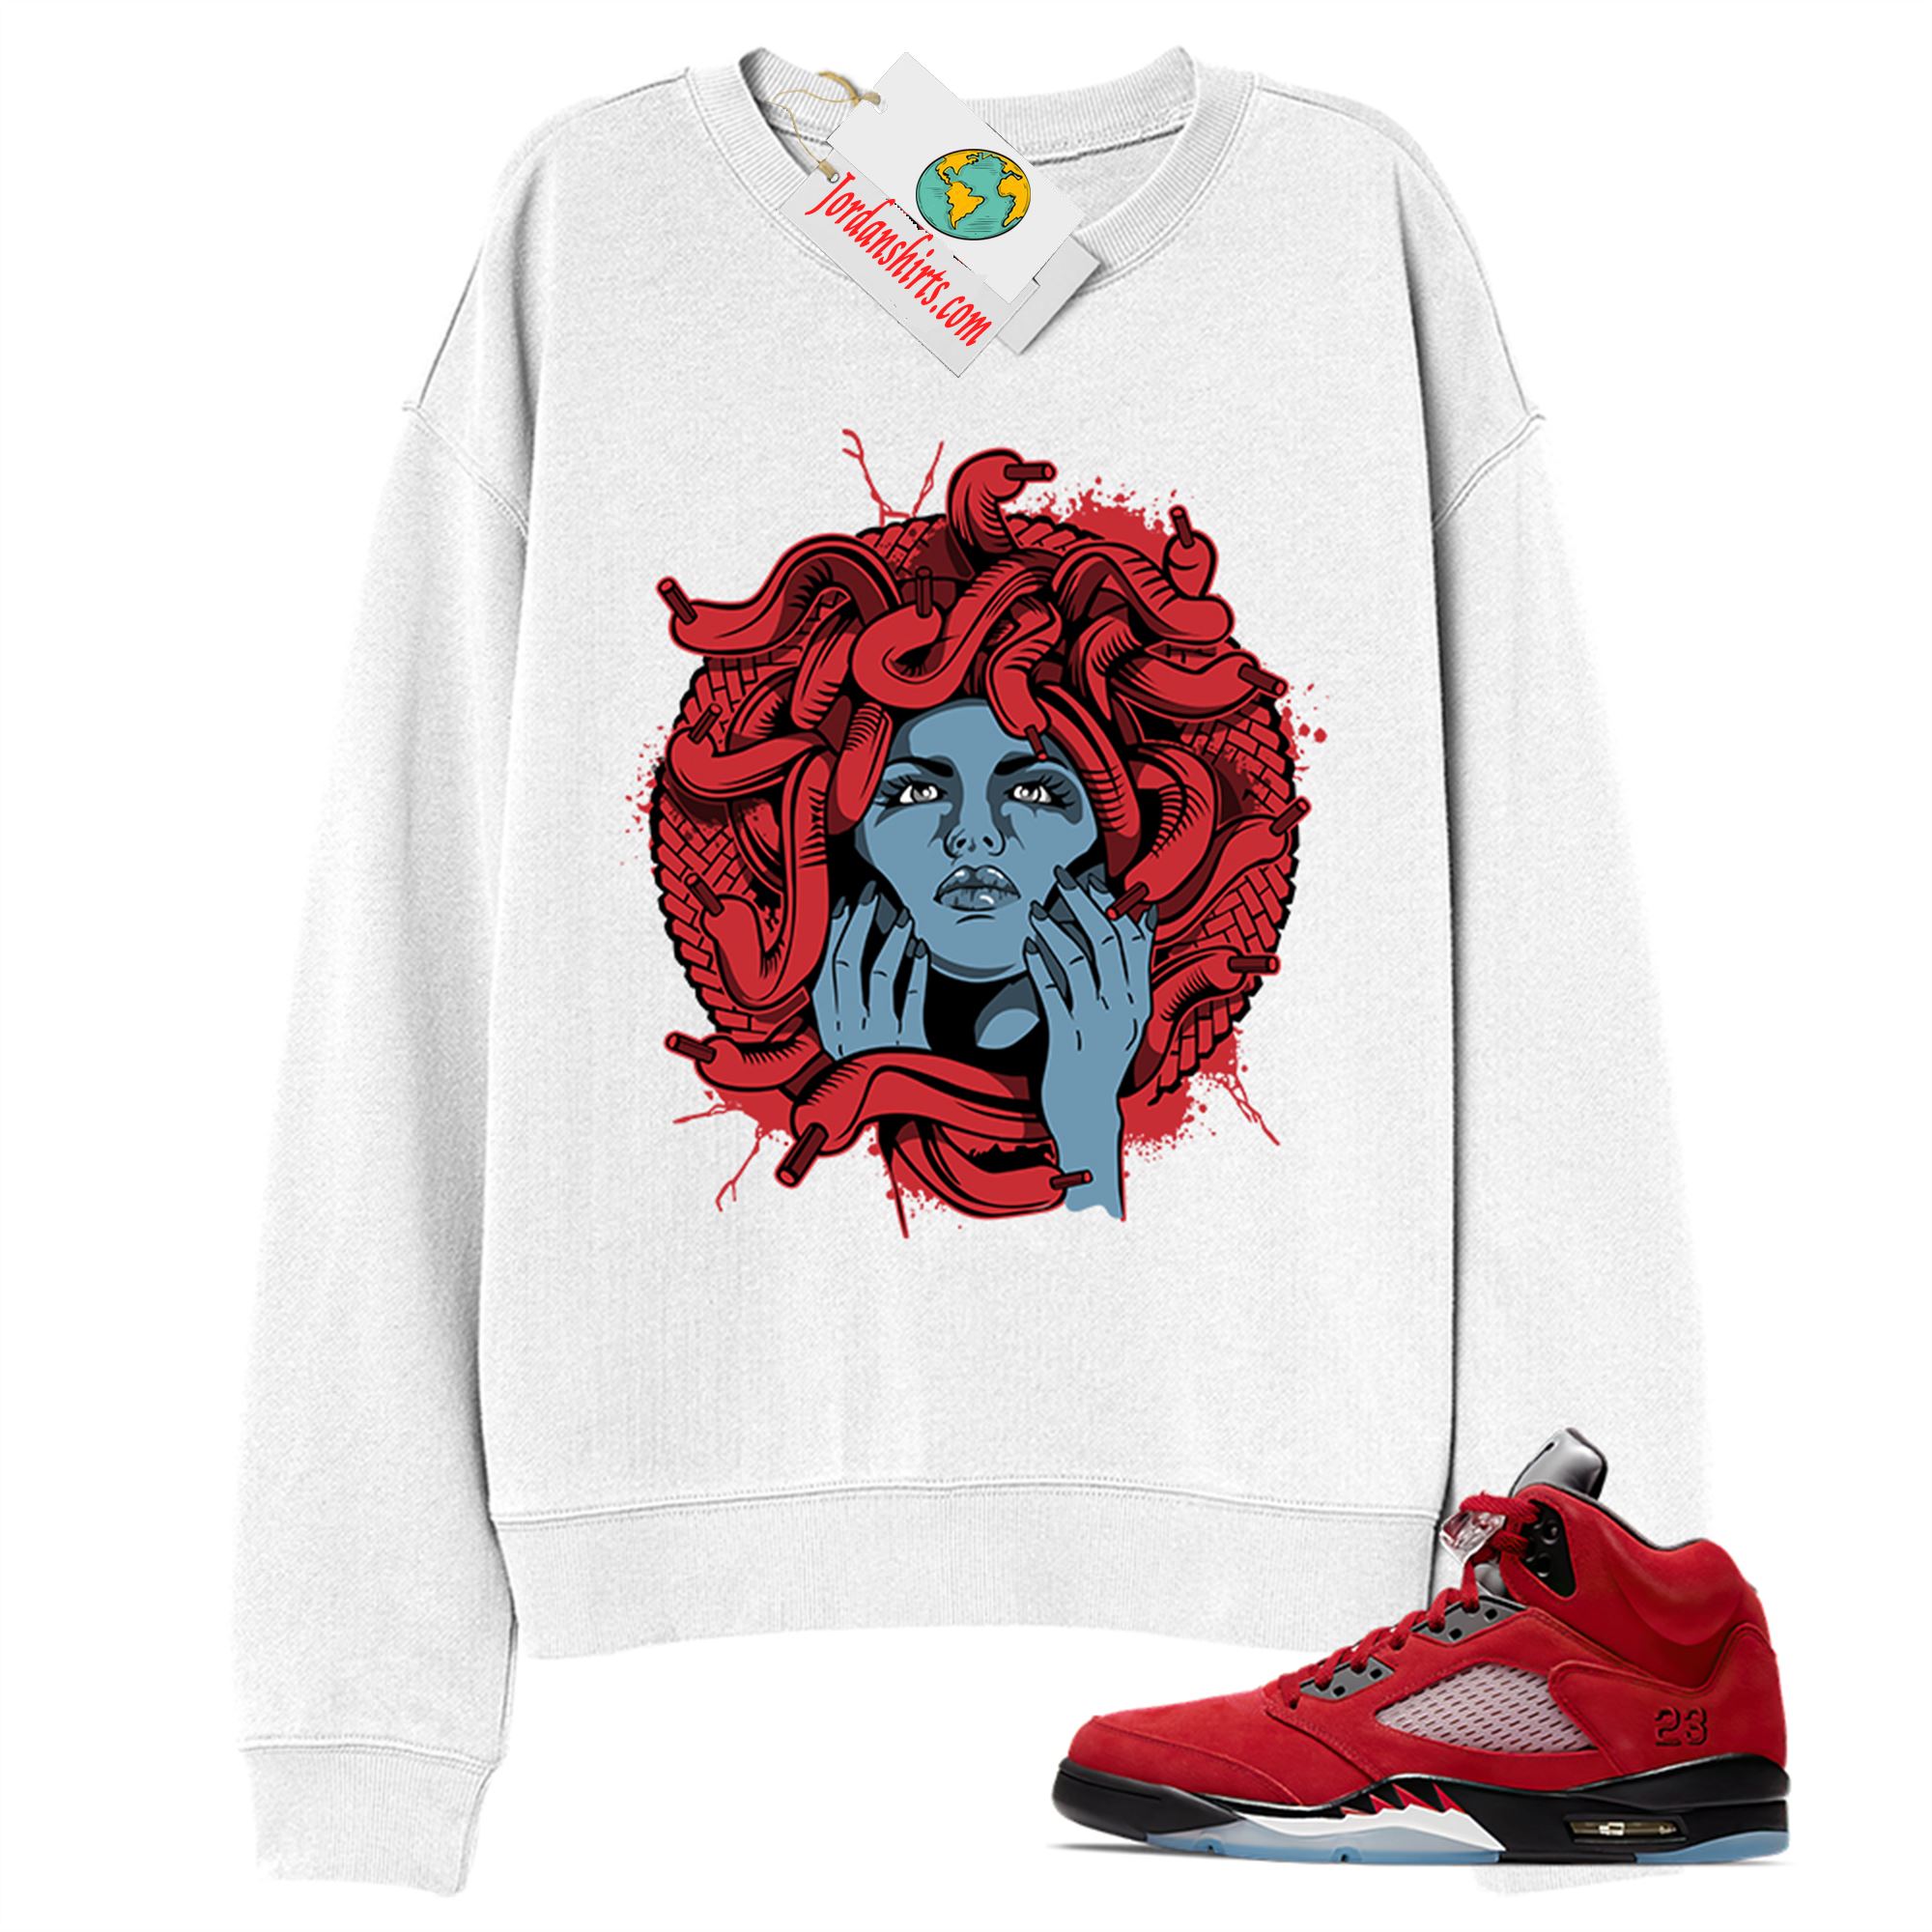 Jordan 5 Sweatshirt, Medusa White Sweatshirt Air Jordan 5 Raging Bull 5s Full Size Up To 5xl